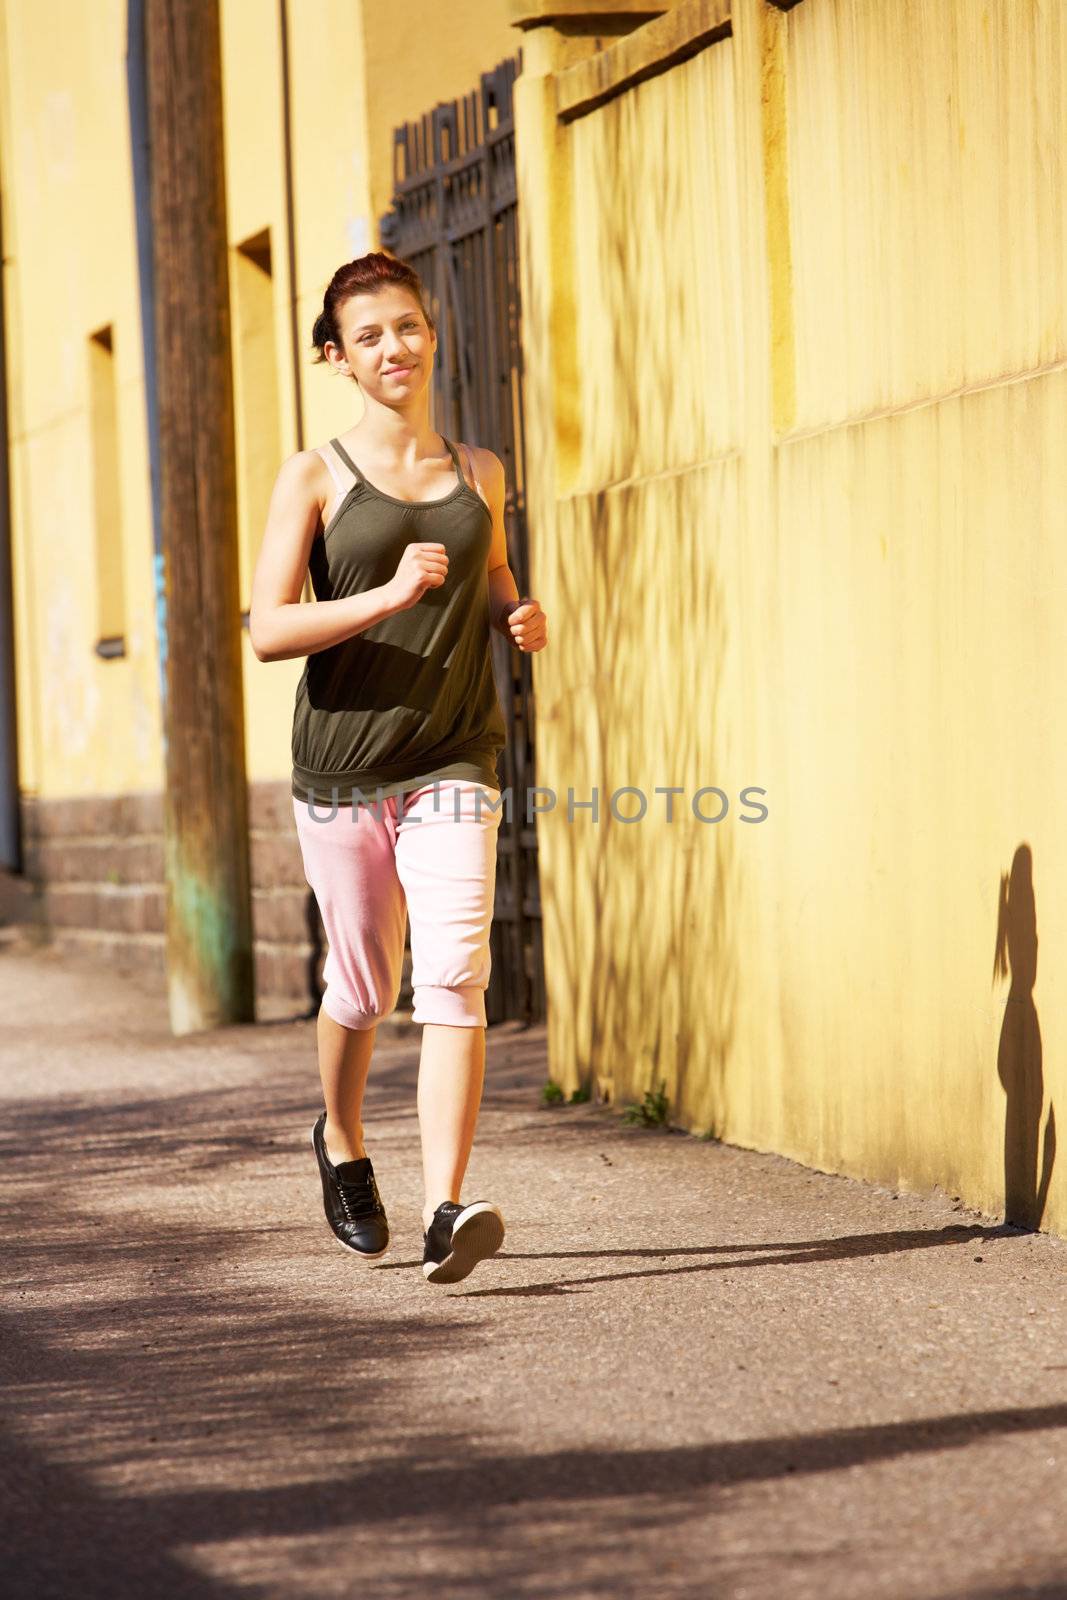 Teenage girl jogging on sidewalk in city